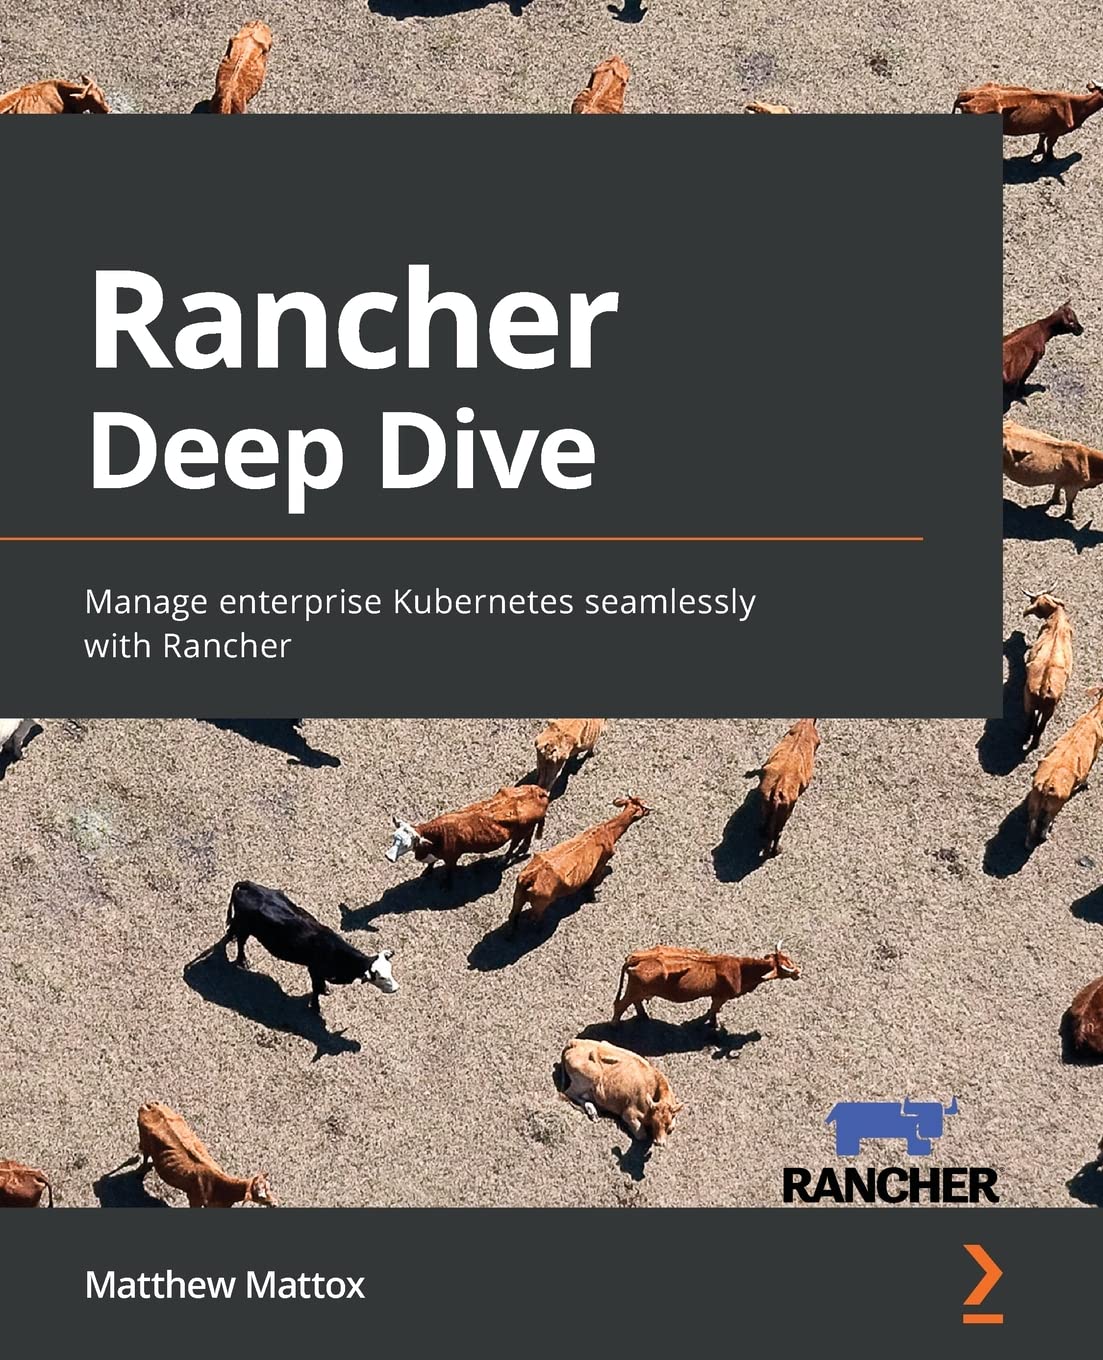 Rancher Deep Dive Book Cover